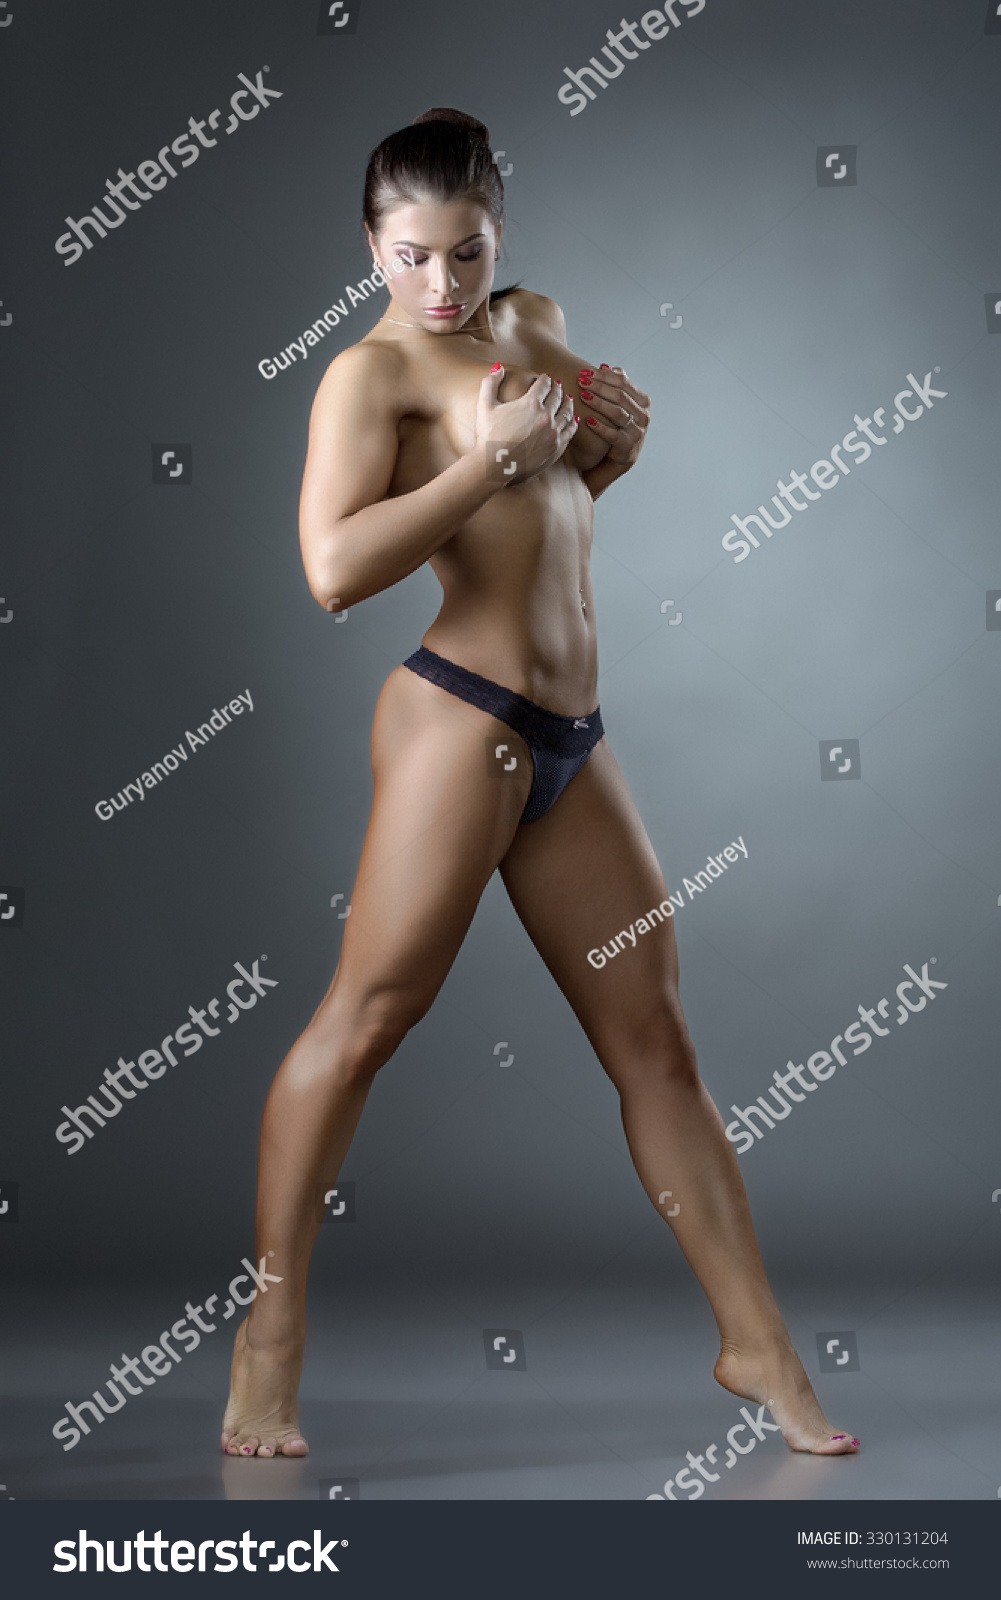 Porn female athlete photos